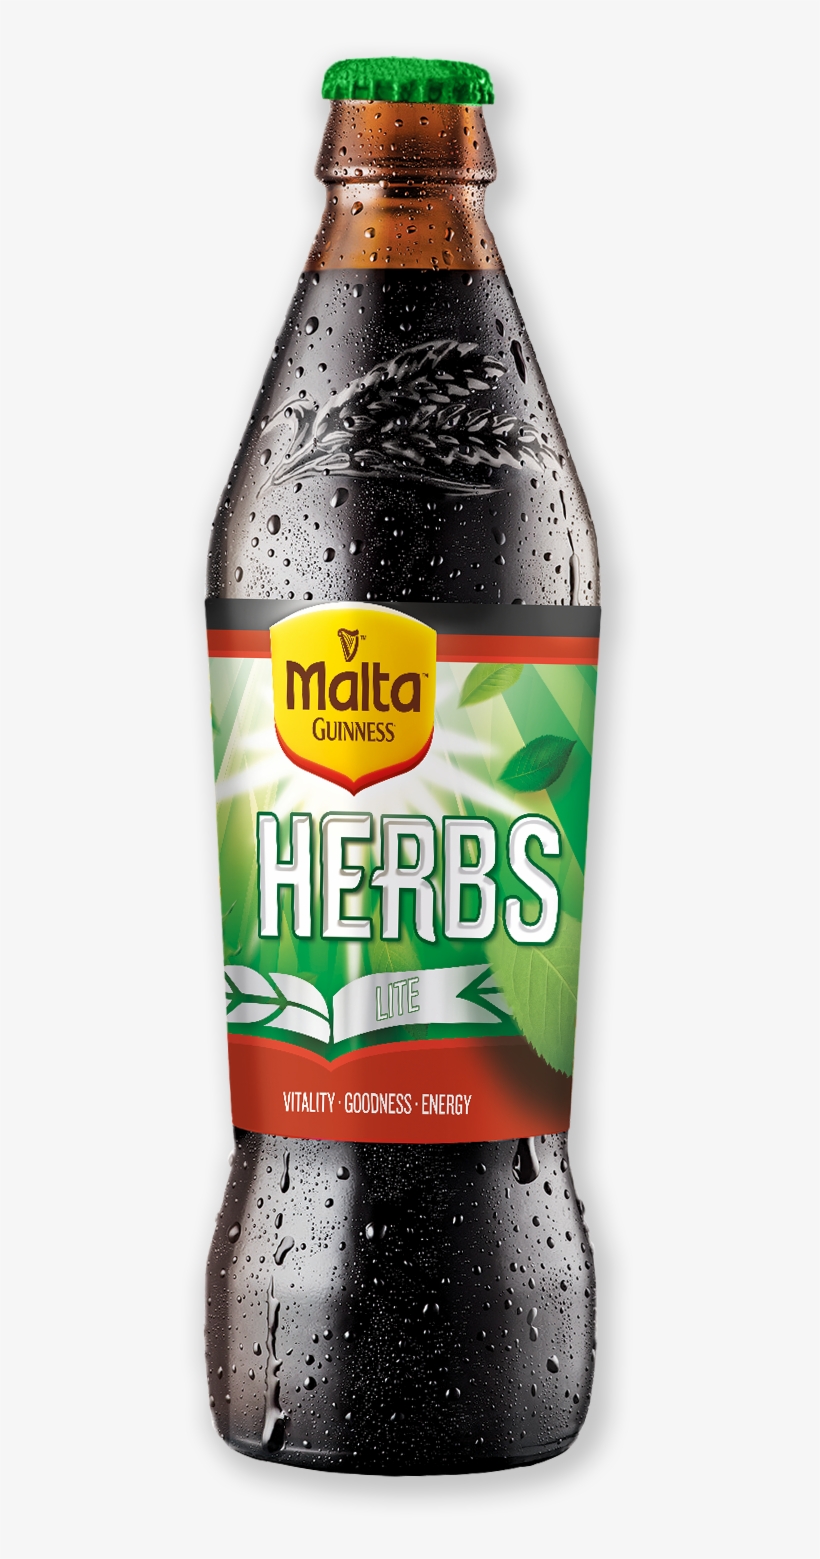 109248 Malta Herbs Die Cut 2 - Malta Guinness Herbs, transparent png #1100883